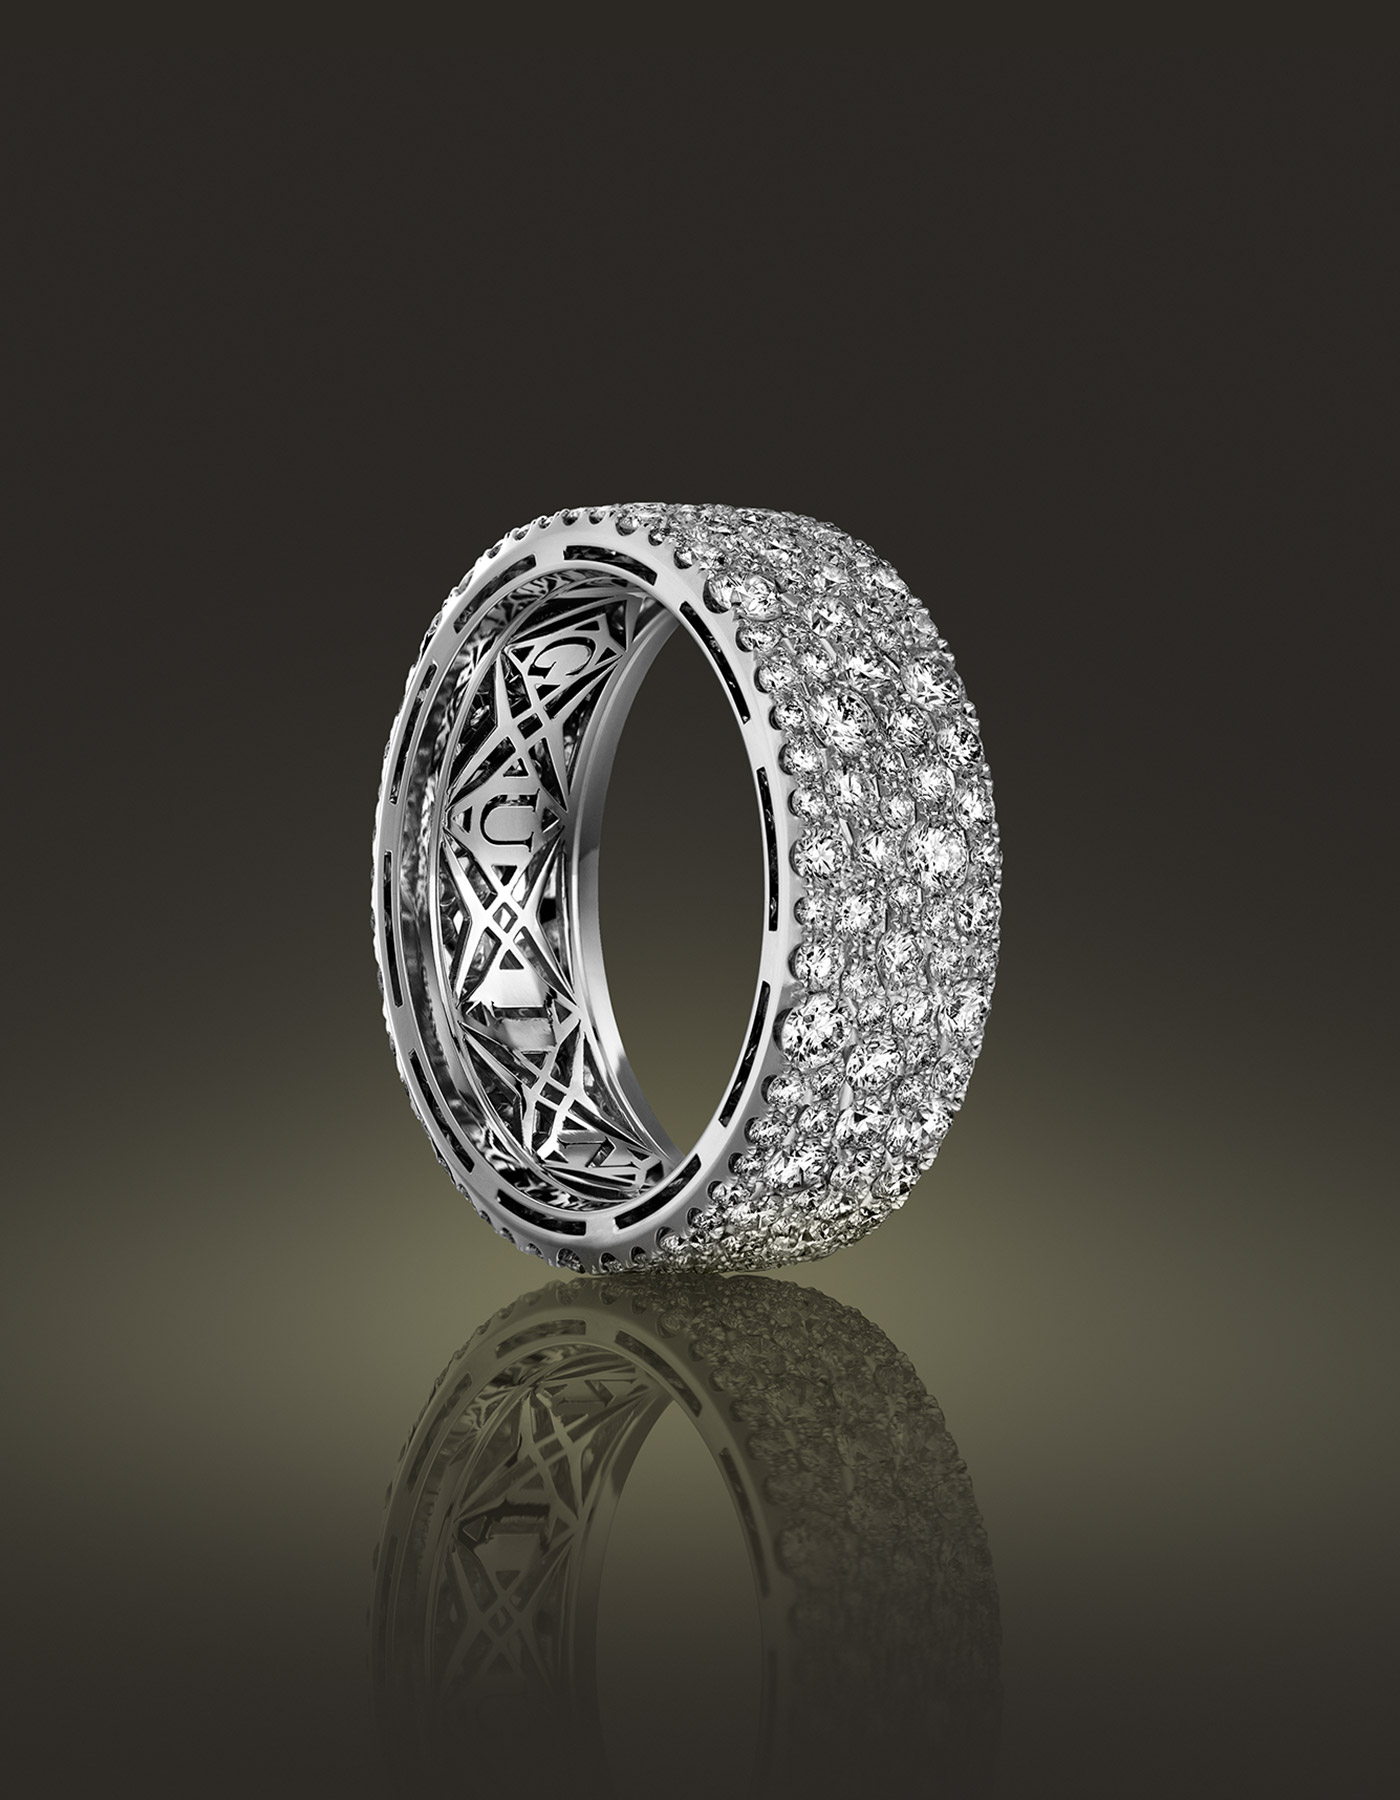 Guinnot Anonymous Snowset diamond ring in 18k white gold